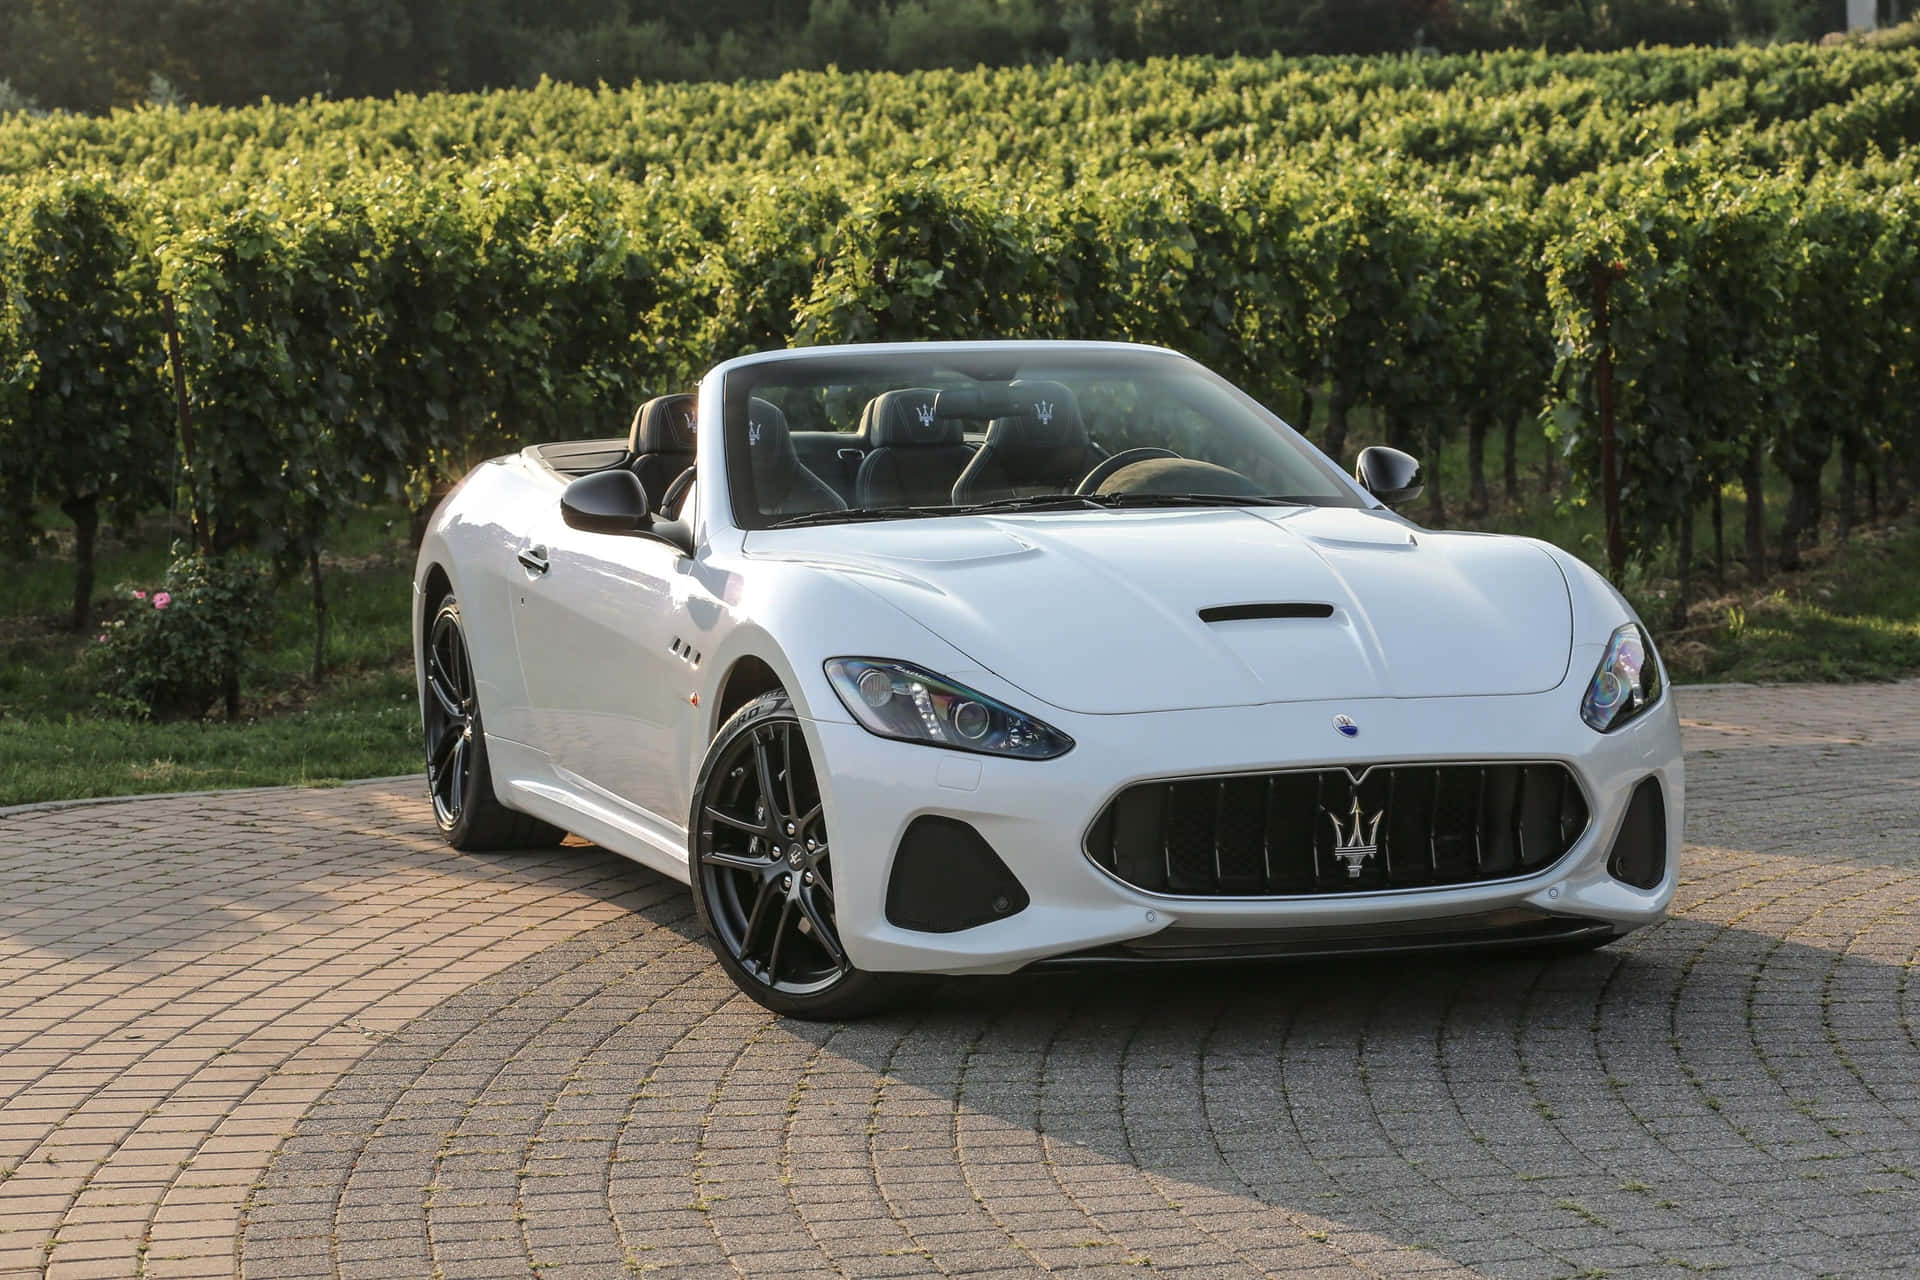 “A Profile of Luxury - The 4K Maserati” Wallpaper